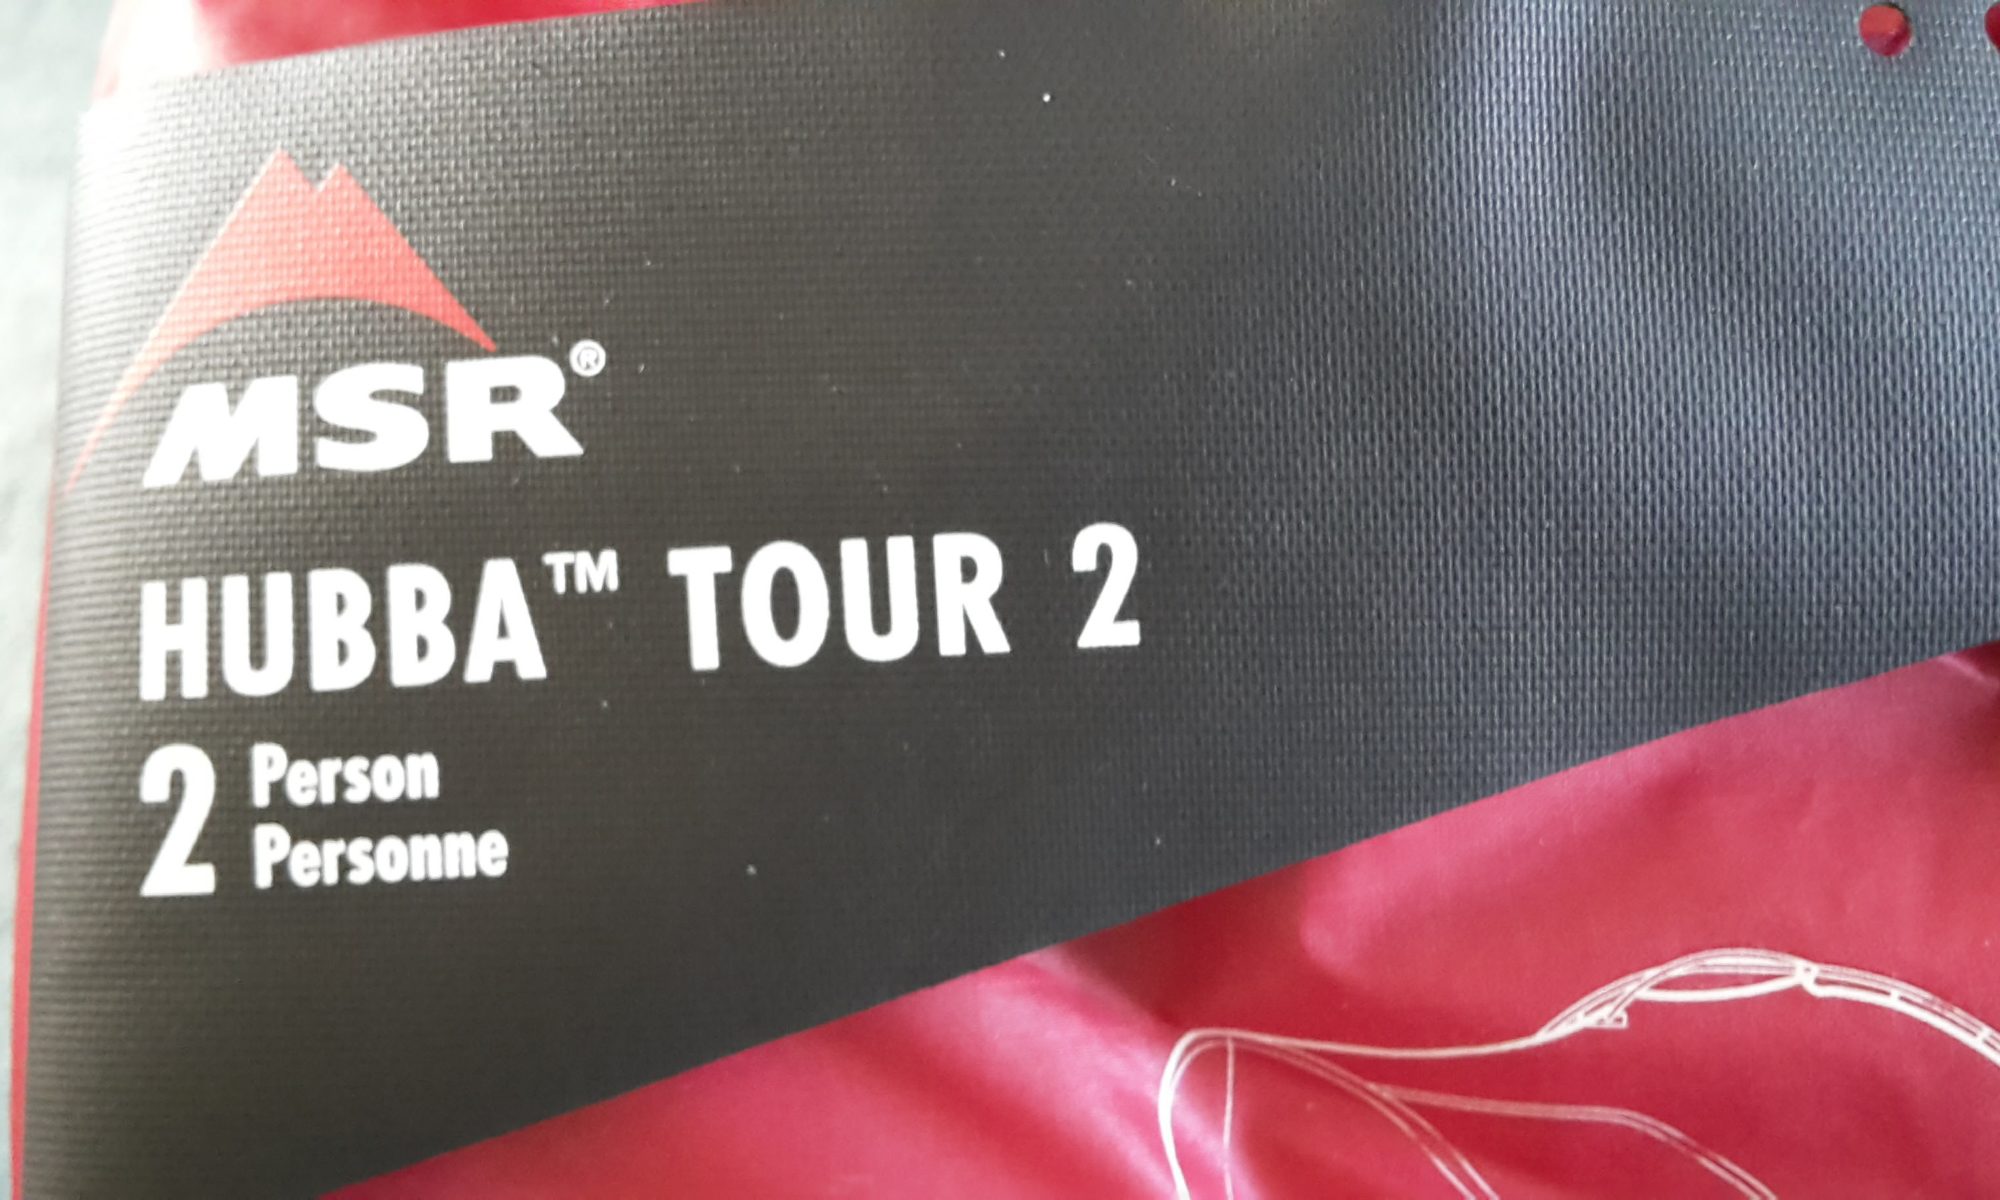 MSR Hubba Tour 2 bag